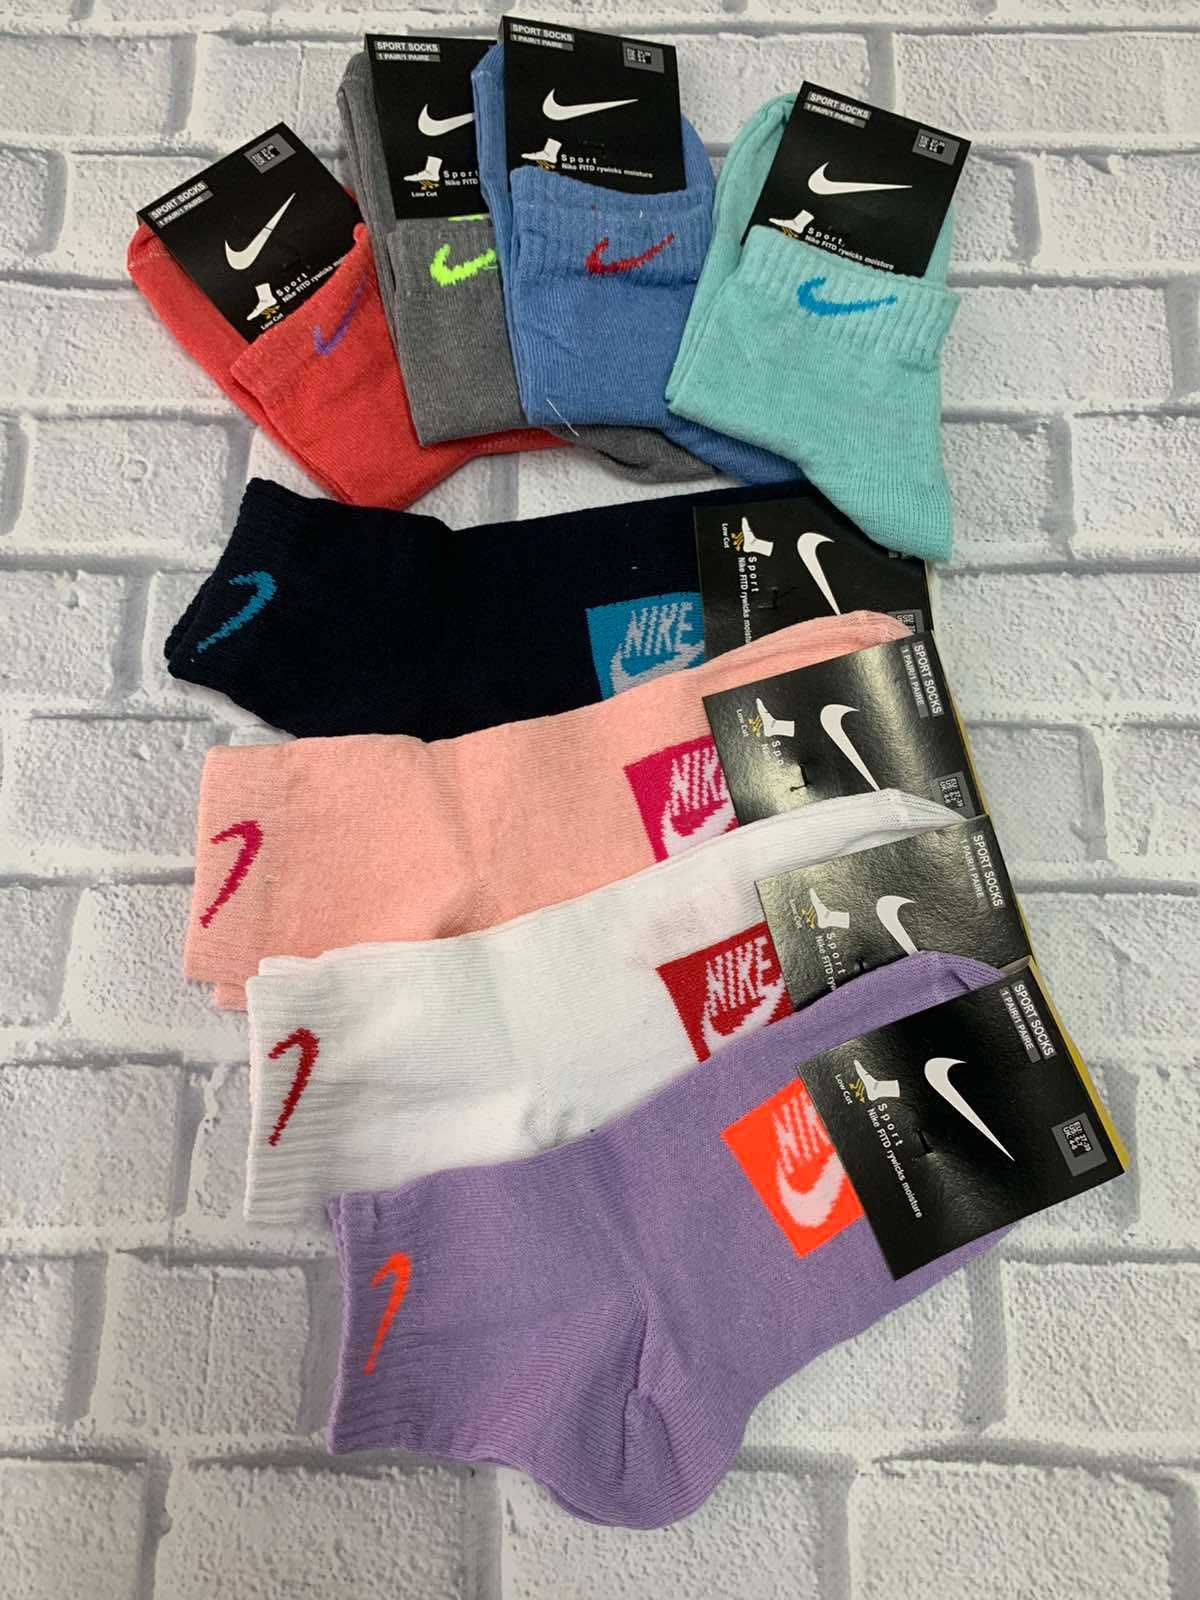 Женские низкие/короткие носки Nike, Puma, Adidas. Жіночі шкарпетки